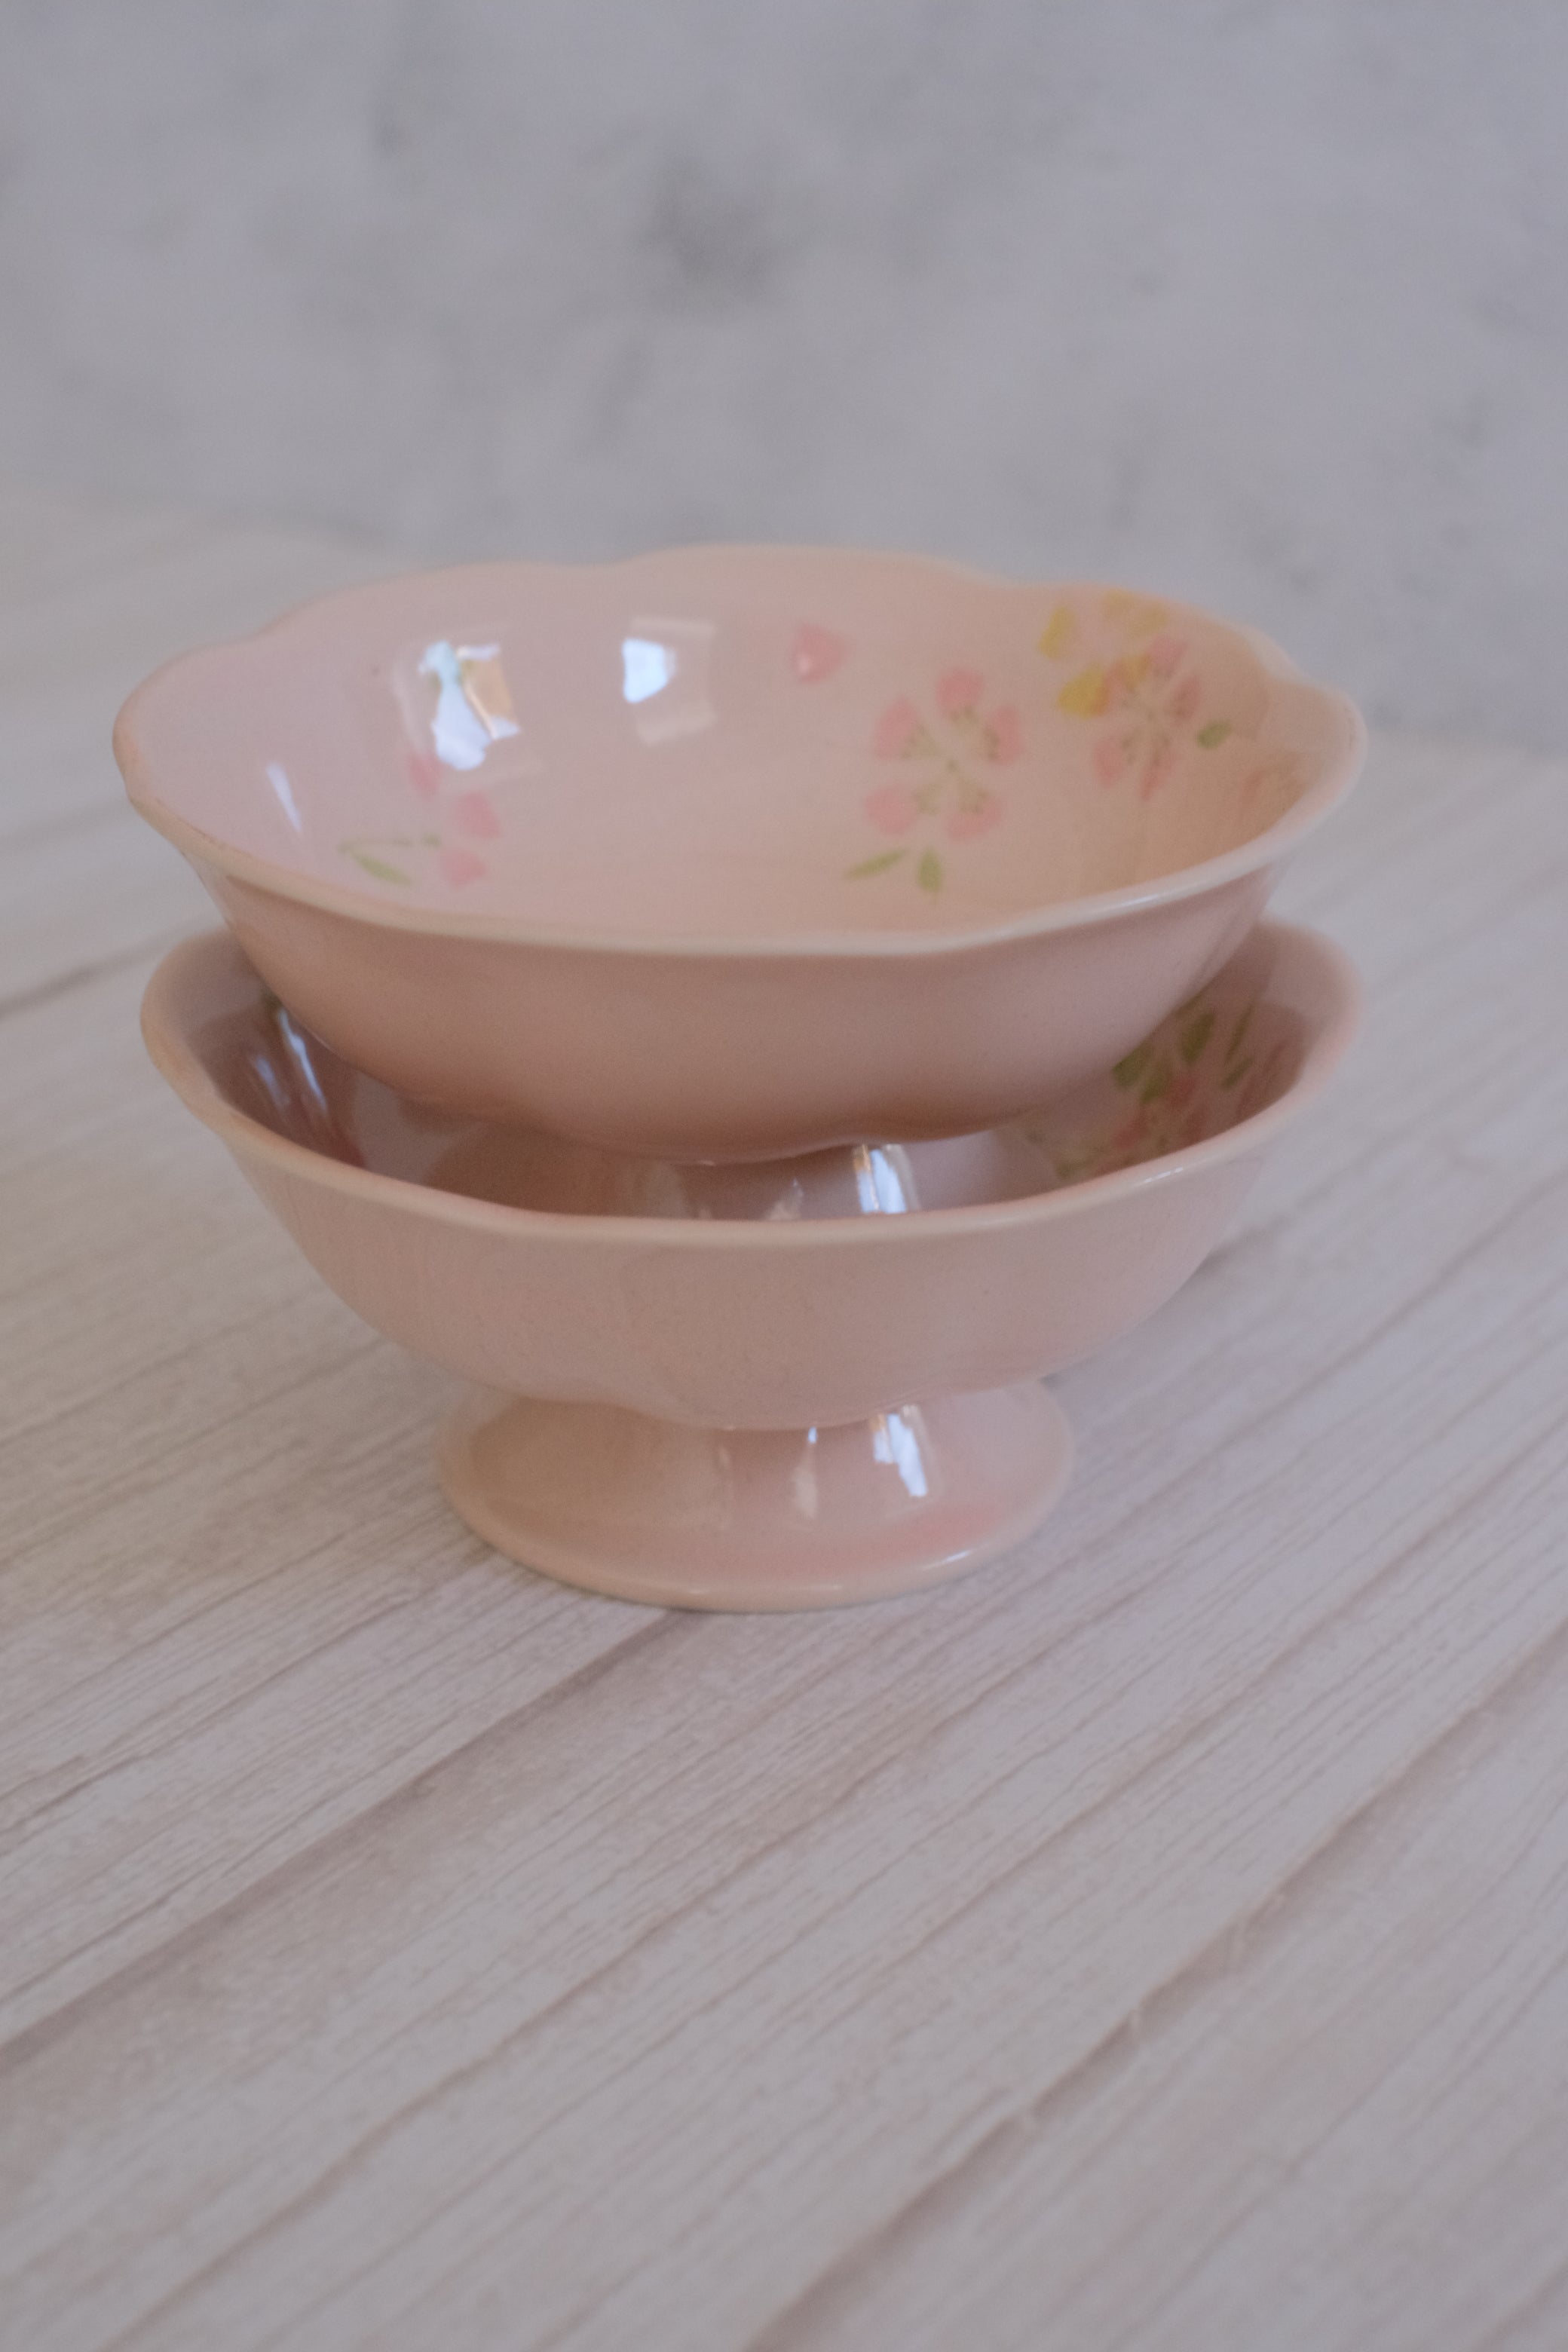 Nadeshiko Floral Edge Pink Elevated Dessert Bowl